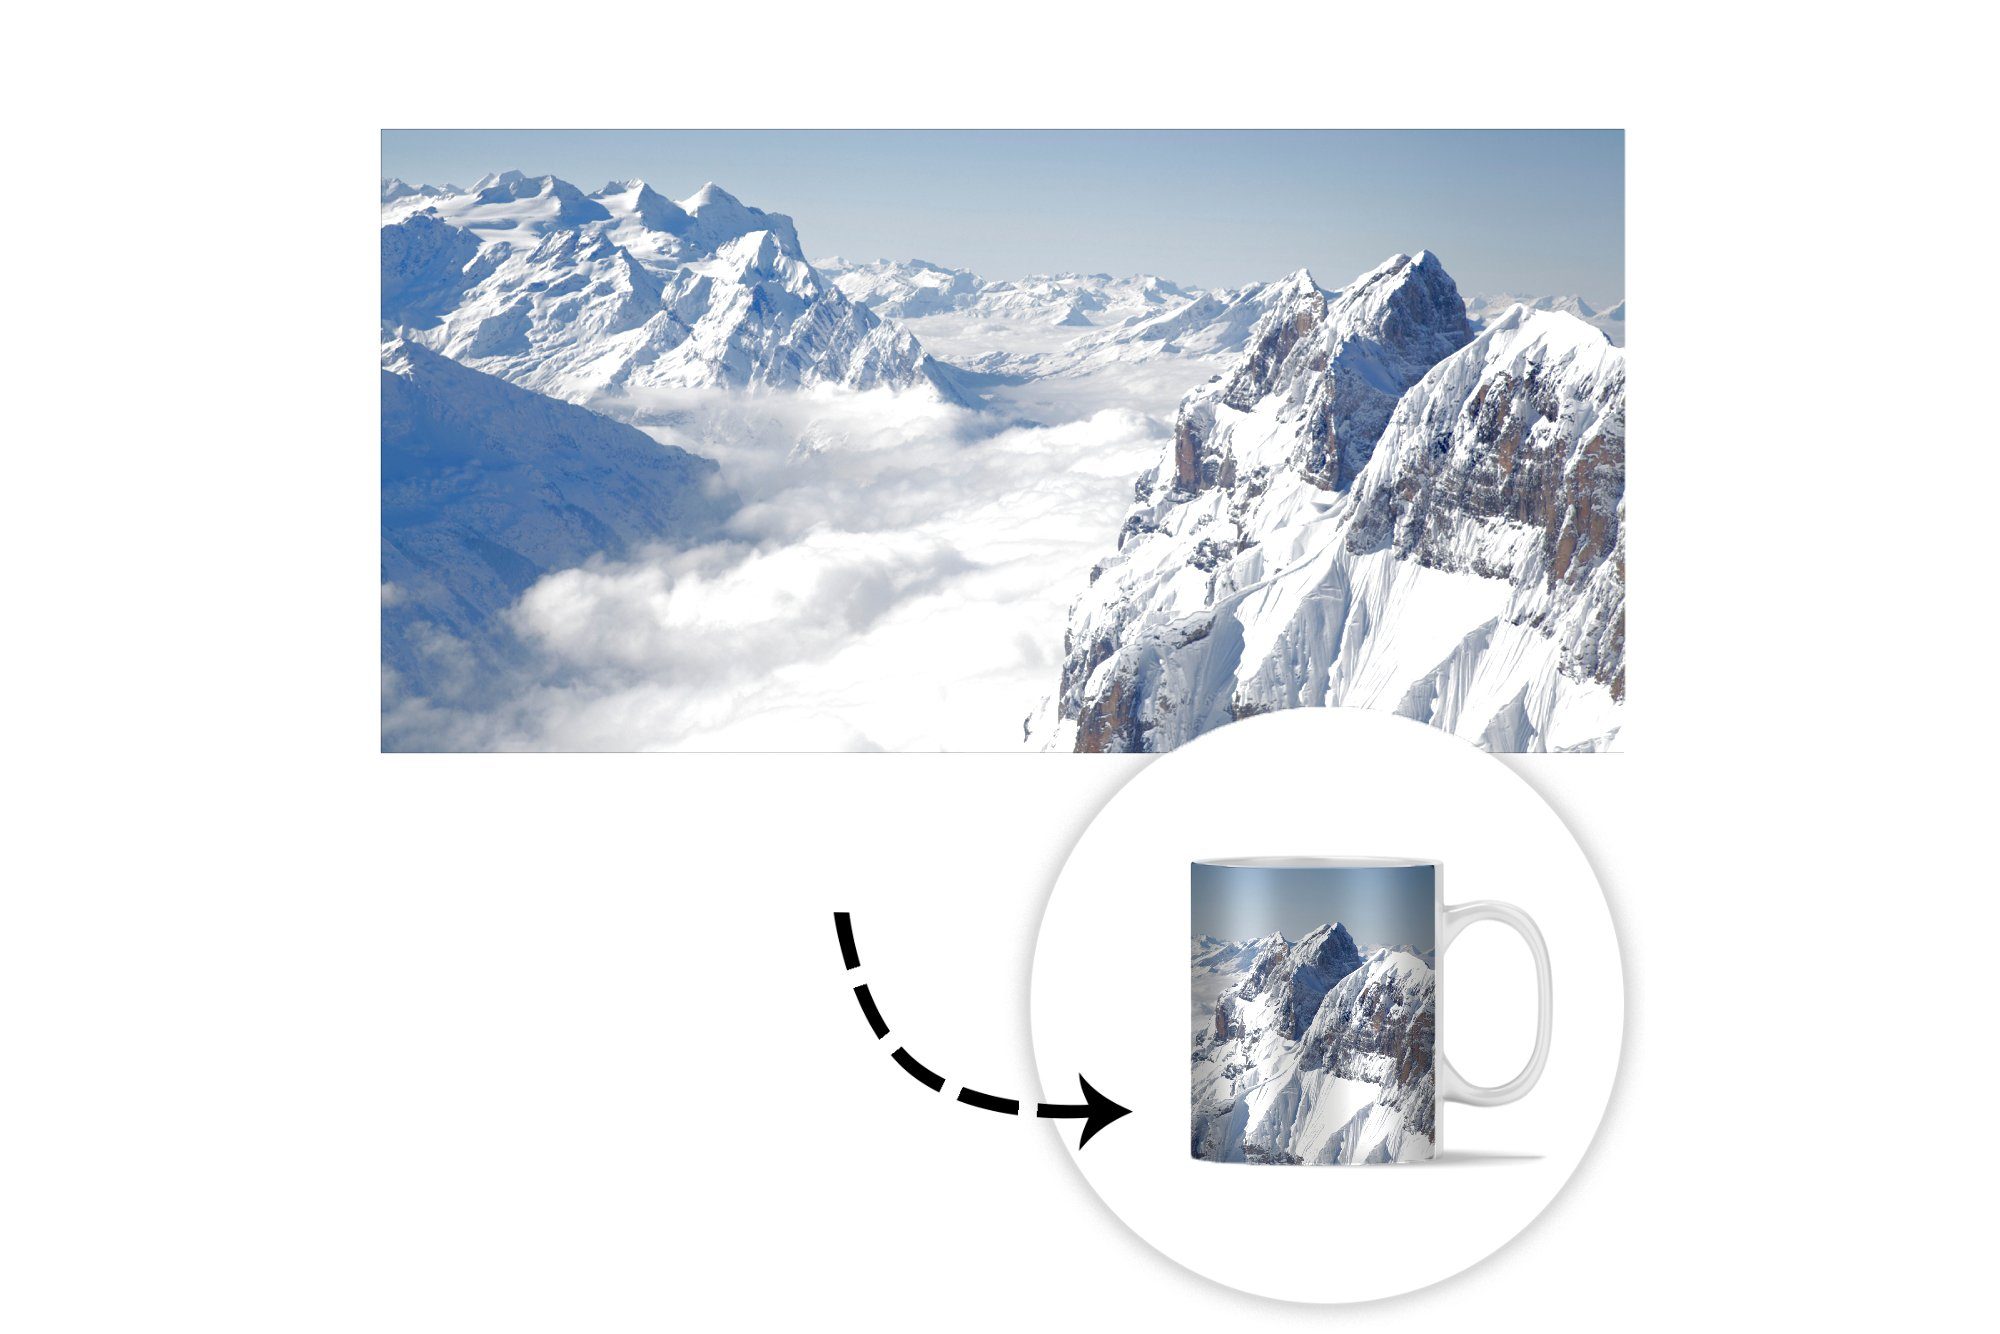 MuchoWow Tasse Alpen - Schnee Keramik, Kaffeetassen, Teetasse, Geschenk Teetasse, - Becher, Berg